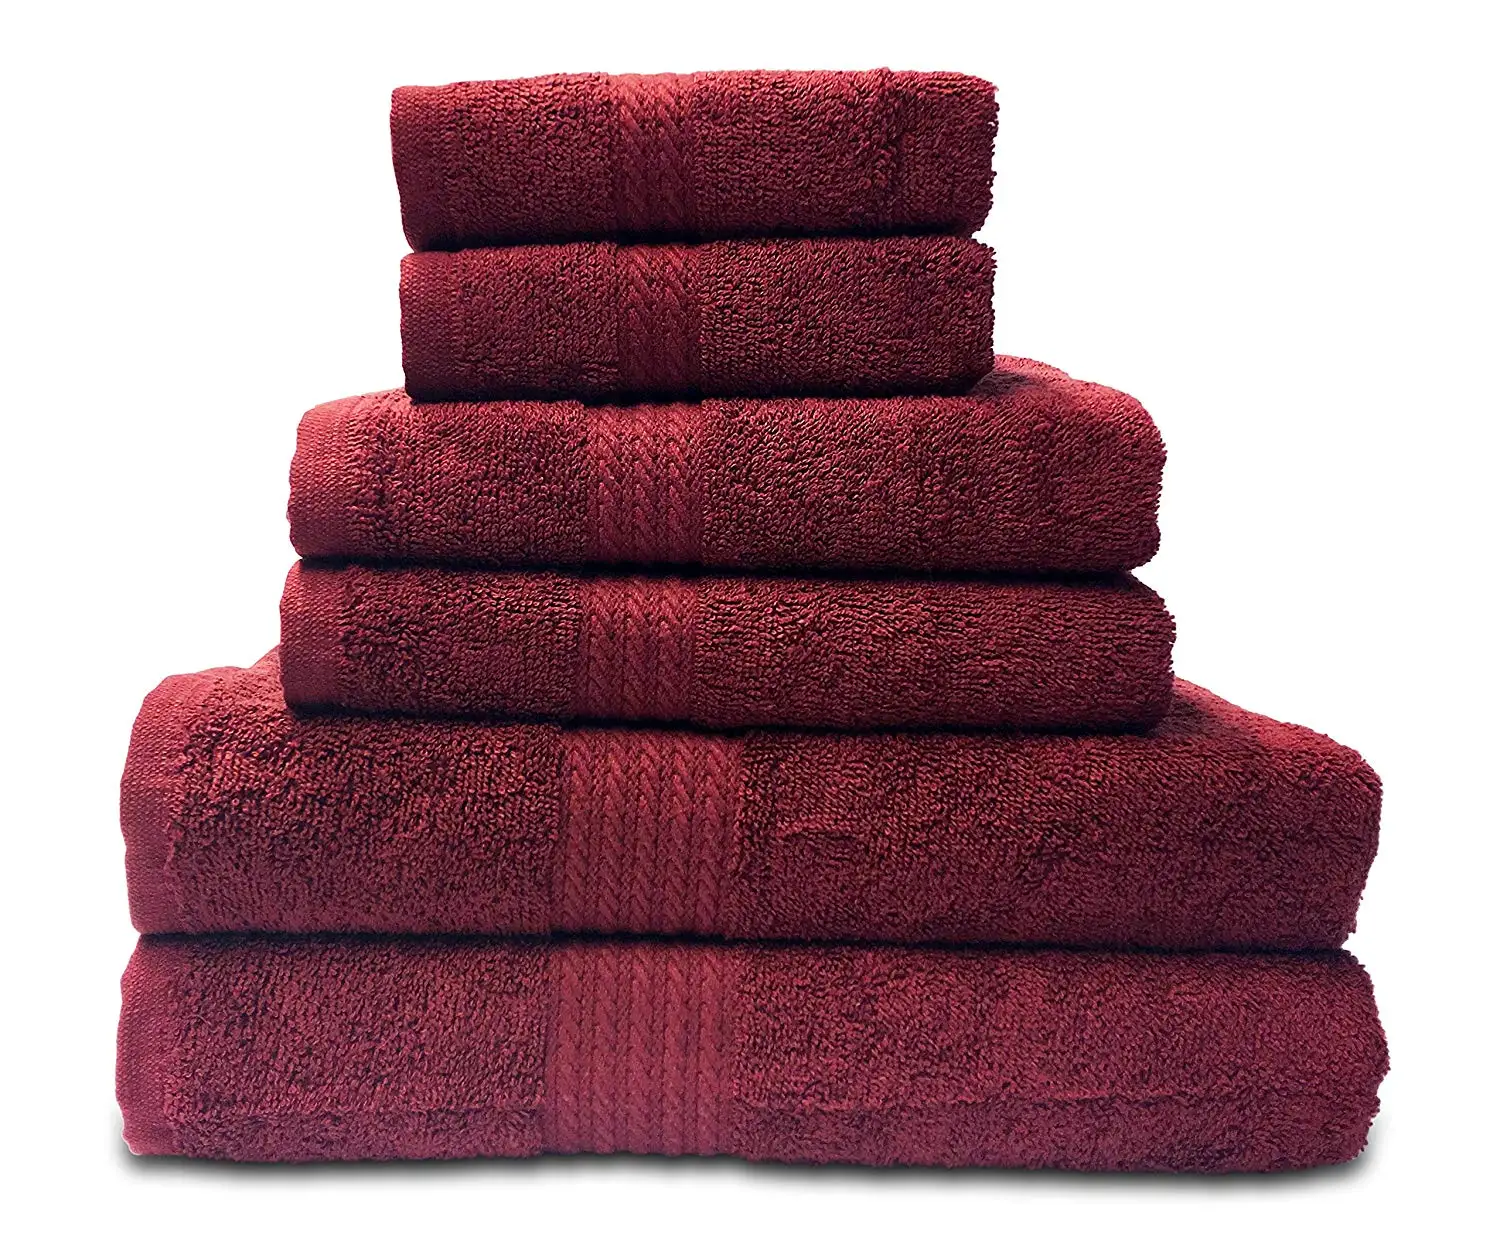 Cheap Burgundy Towels, find Burgundy Towels deals on line at Alibaba.com